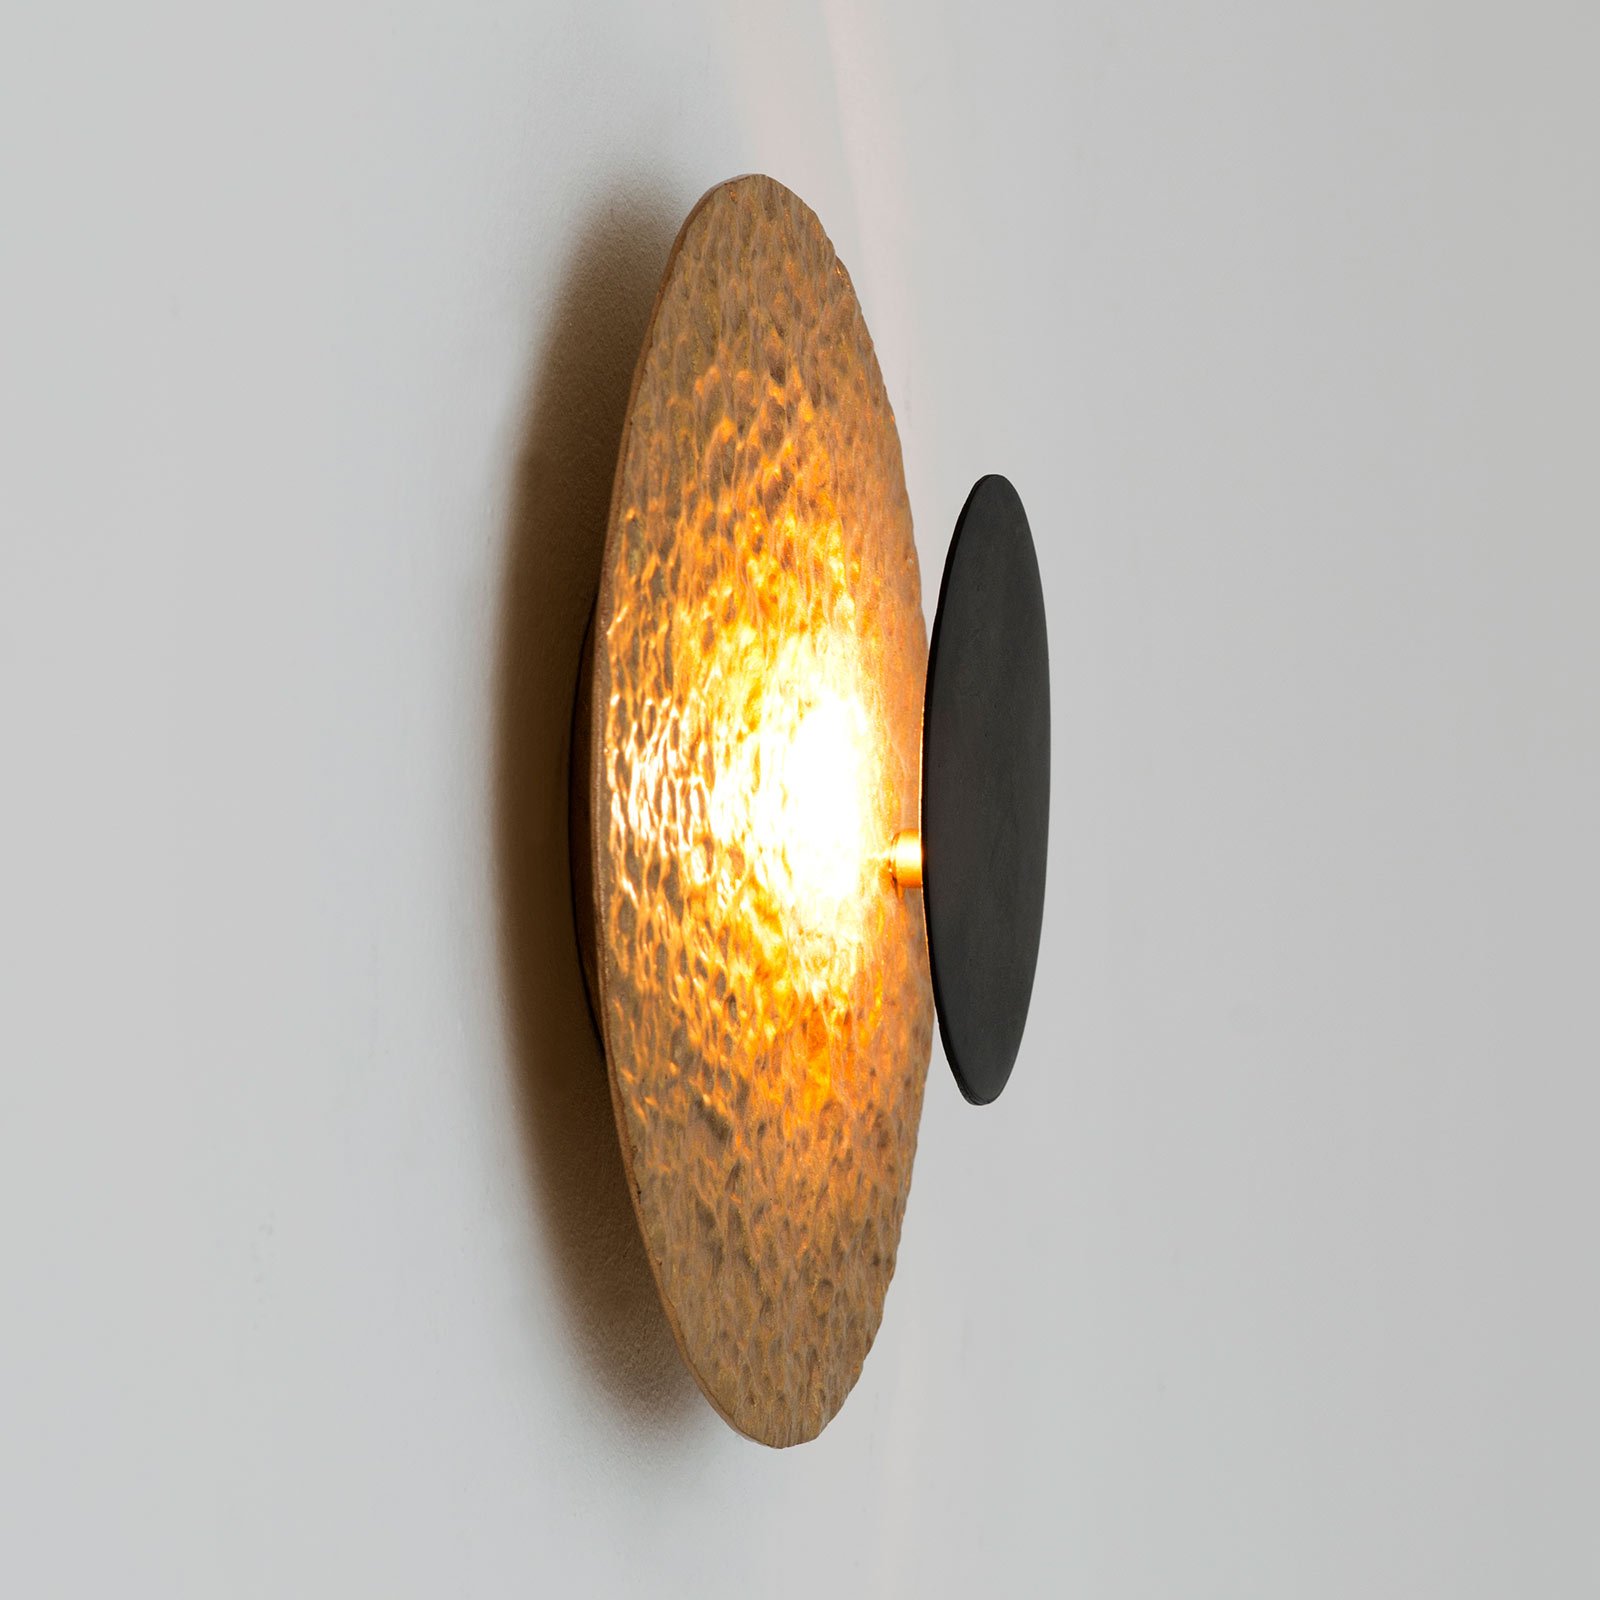 Infinity LED wall light in gold, Ø 20 cm